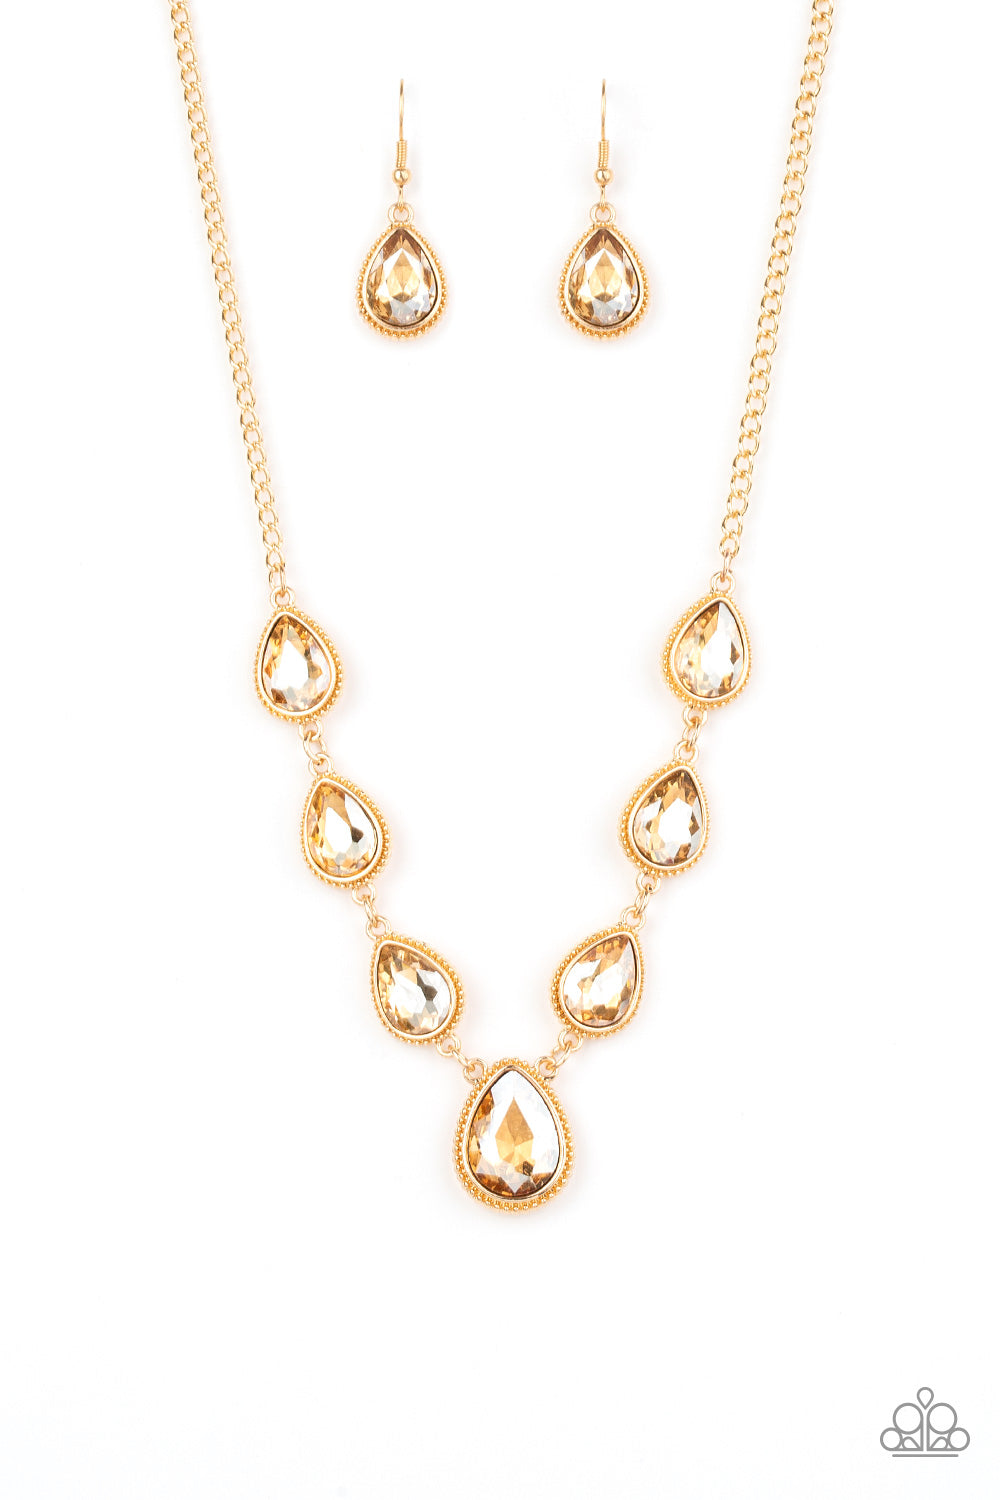 Paparazzi Accessories Socialite Social - Gold Necklaces - Lady T Accessories